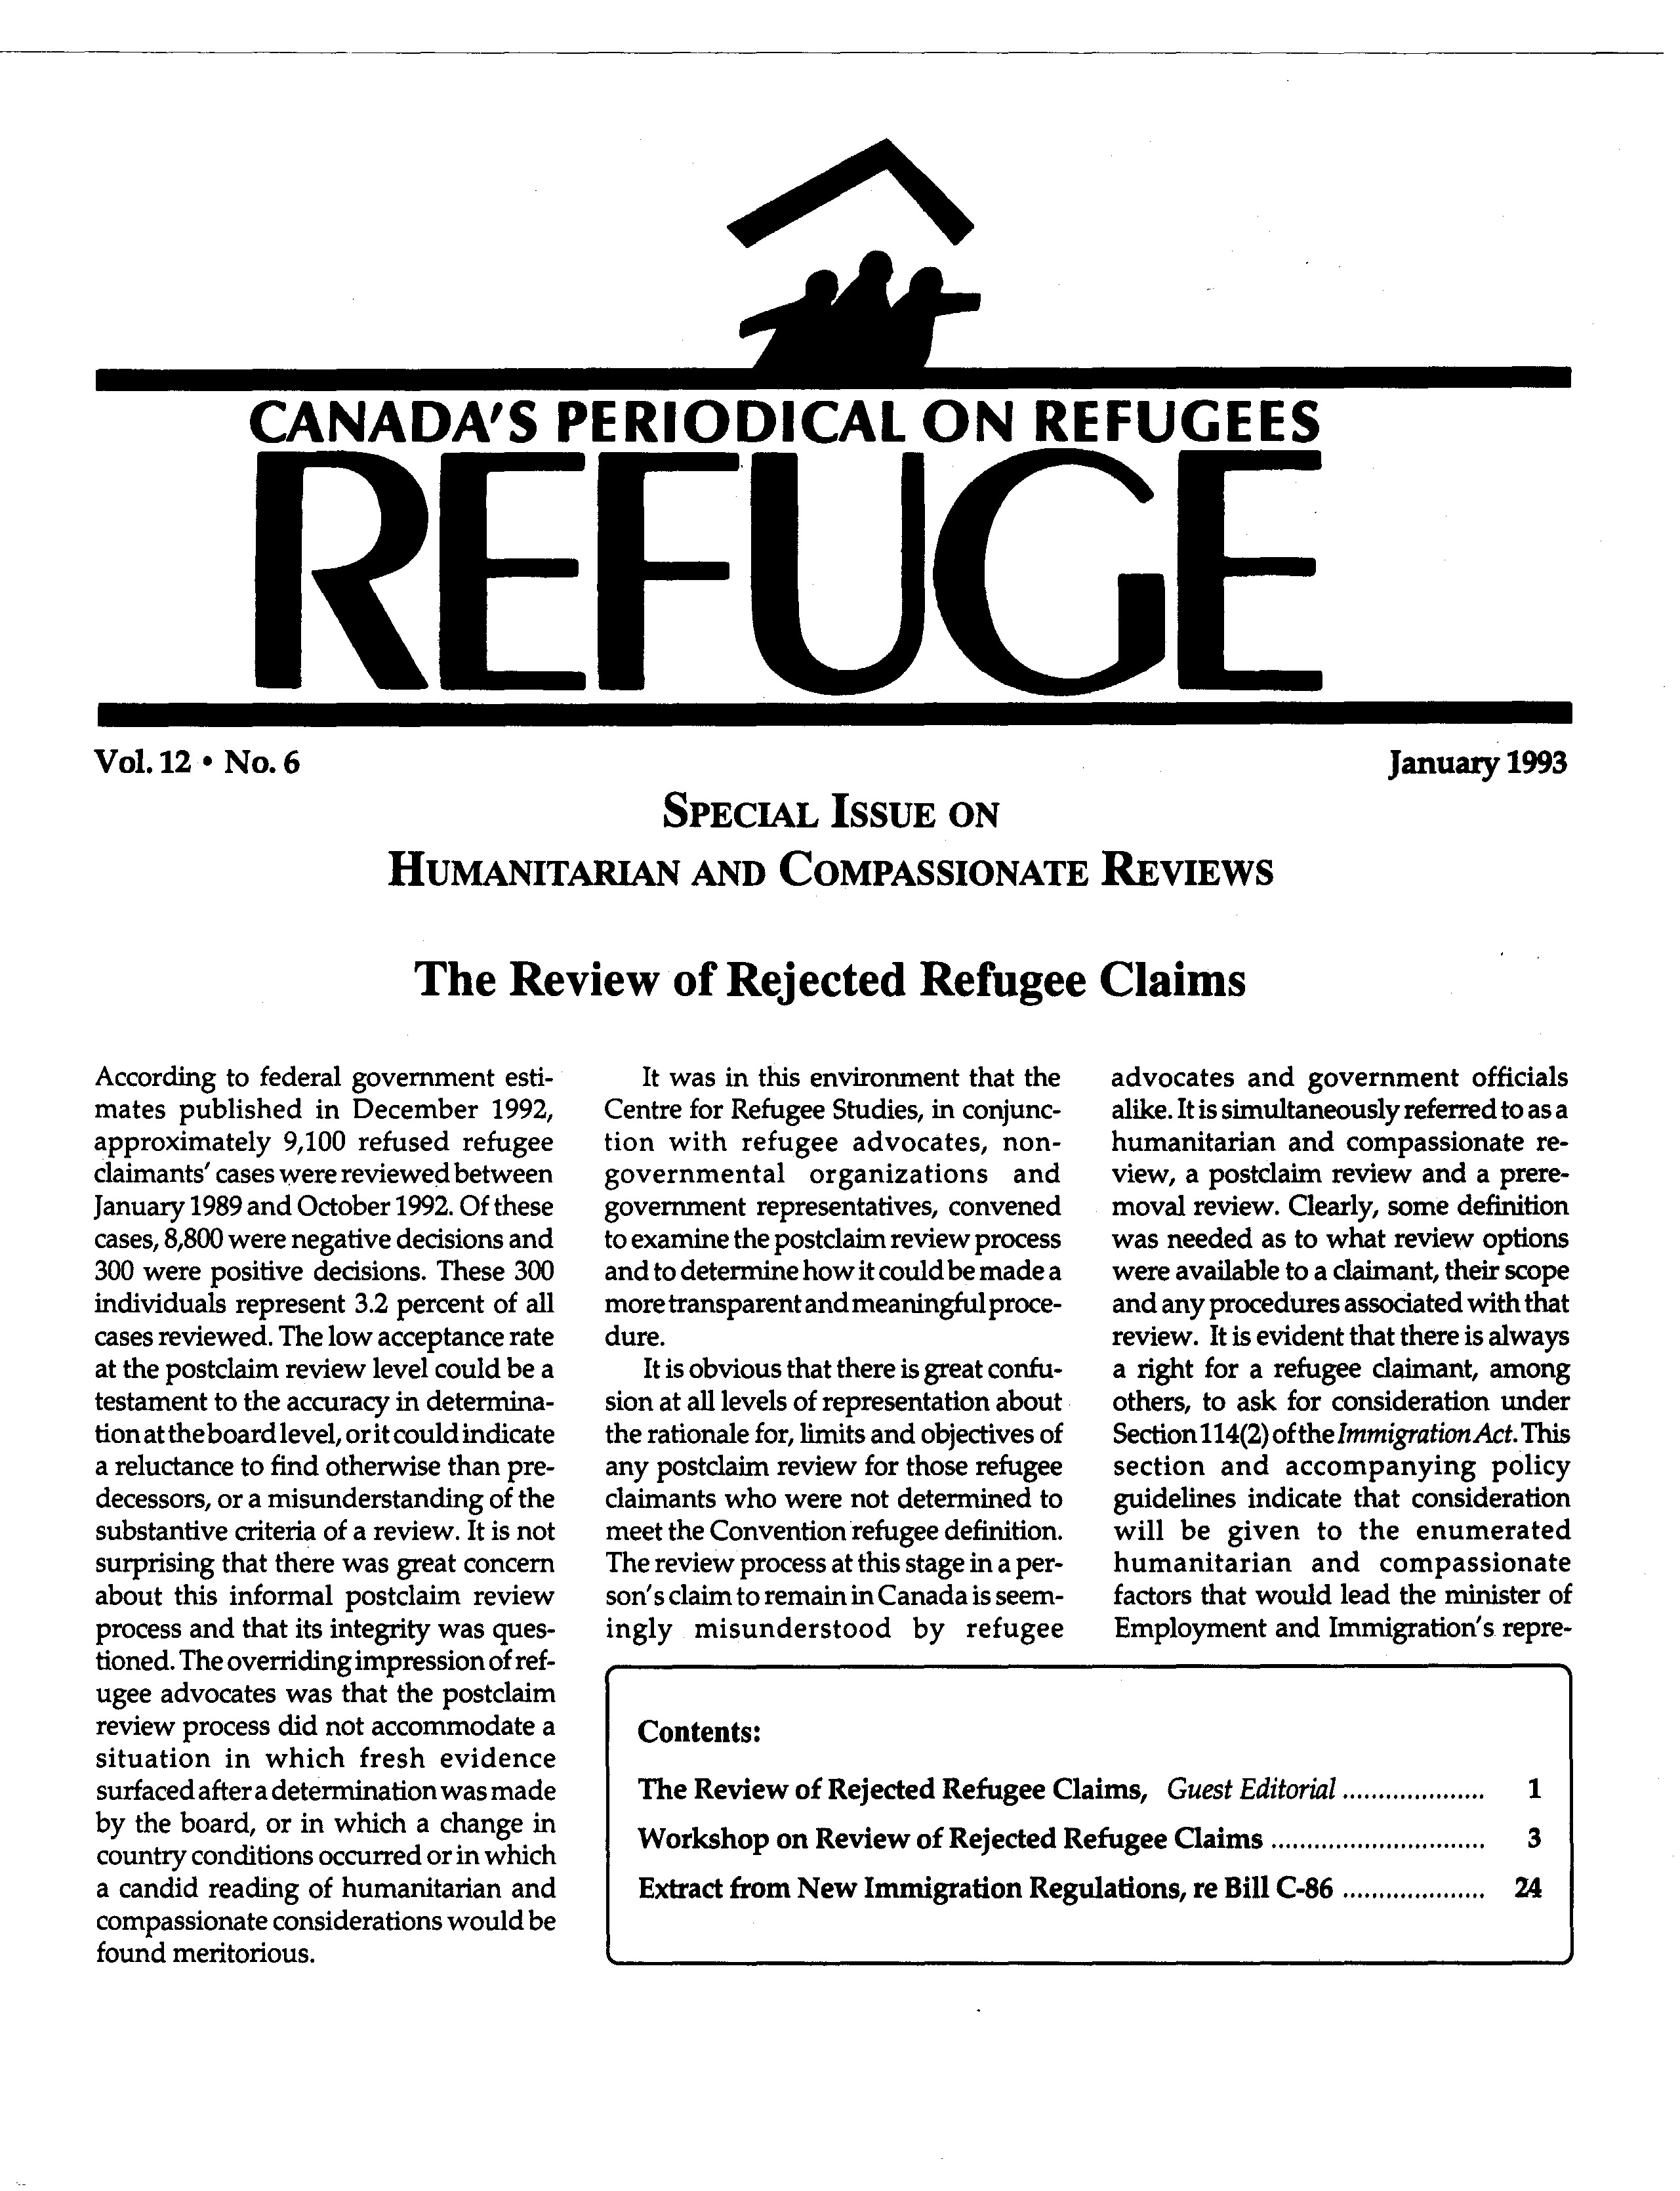 first page Refuge vol. 12.6 1993